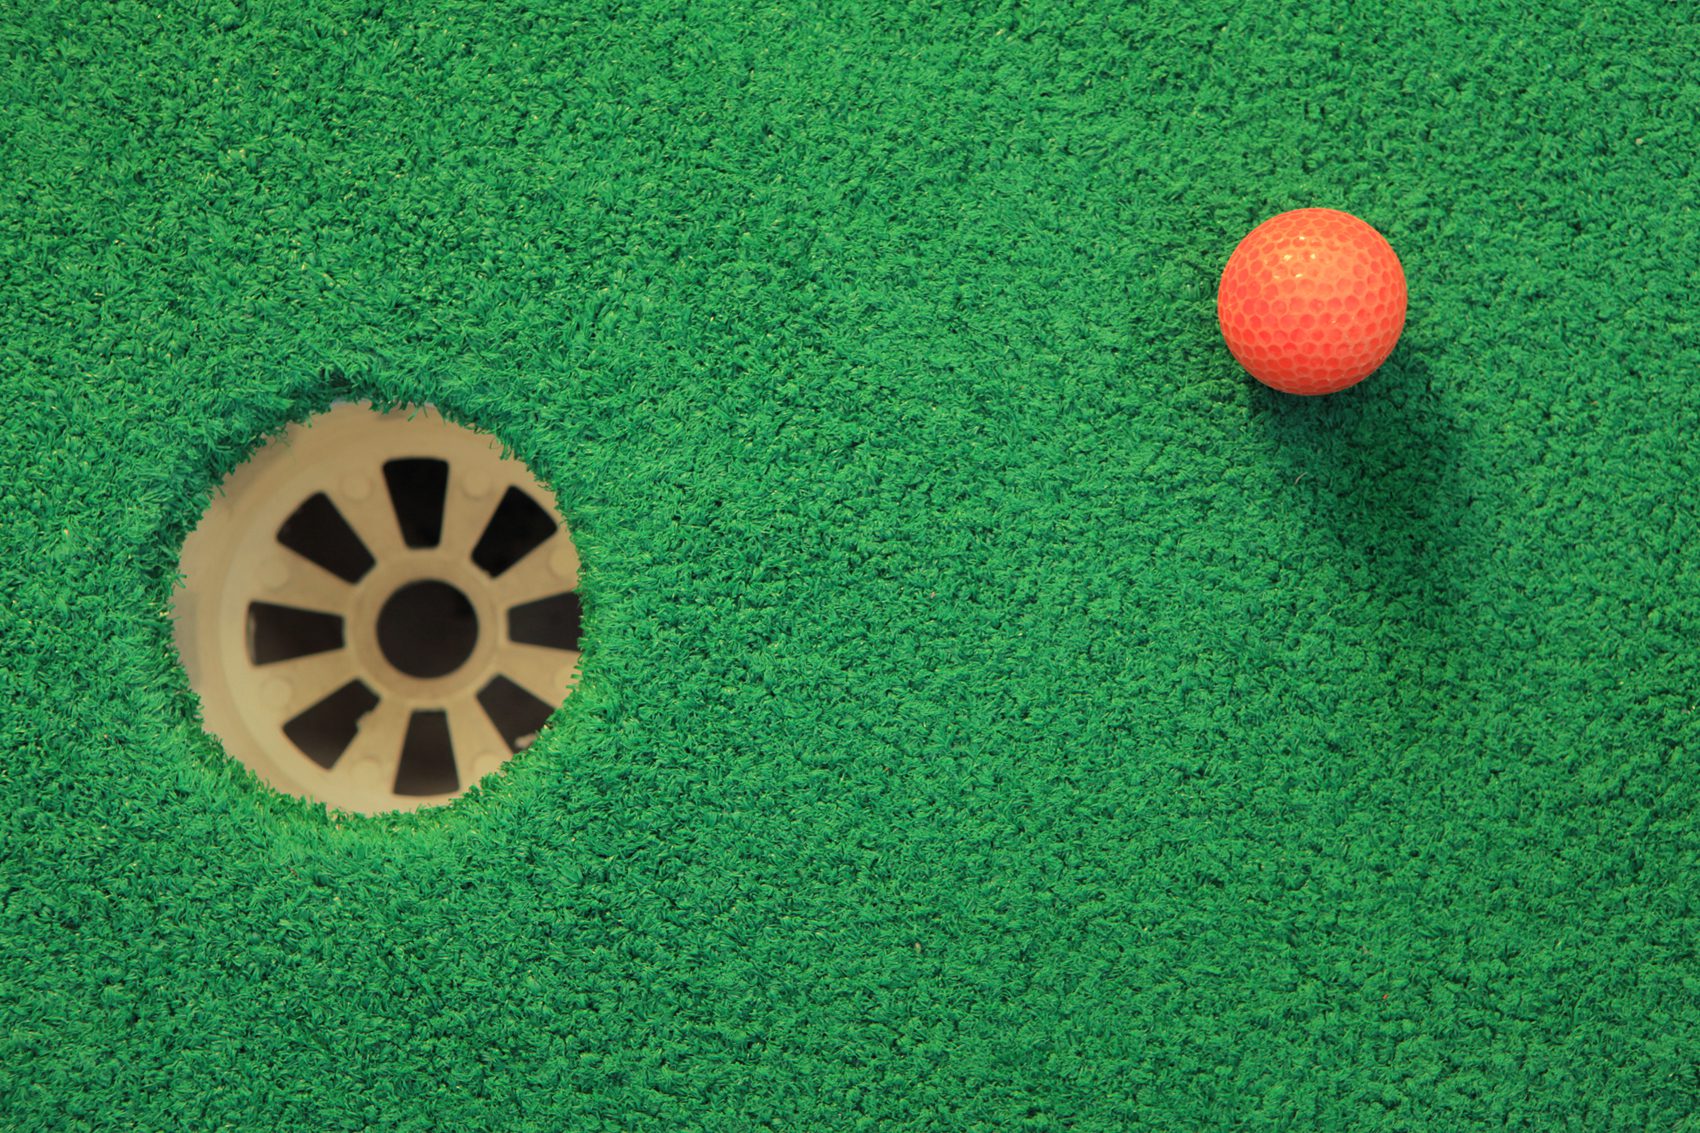 Myrtle Beach mini golf course with orange ball.